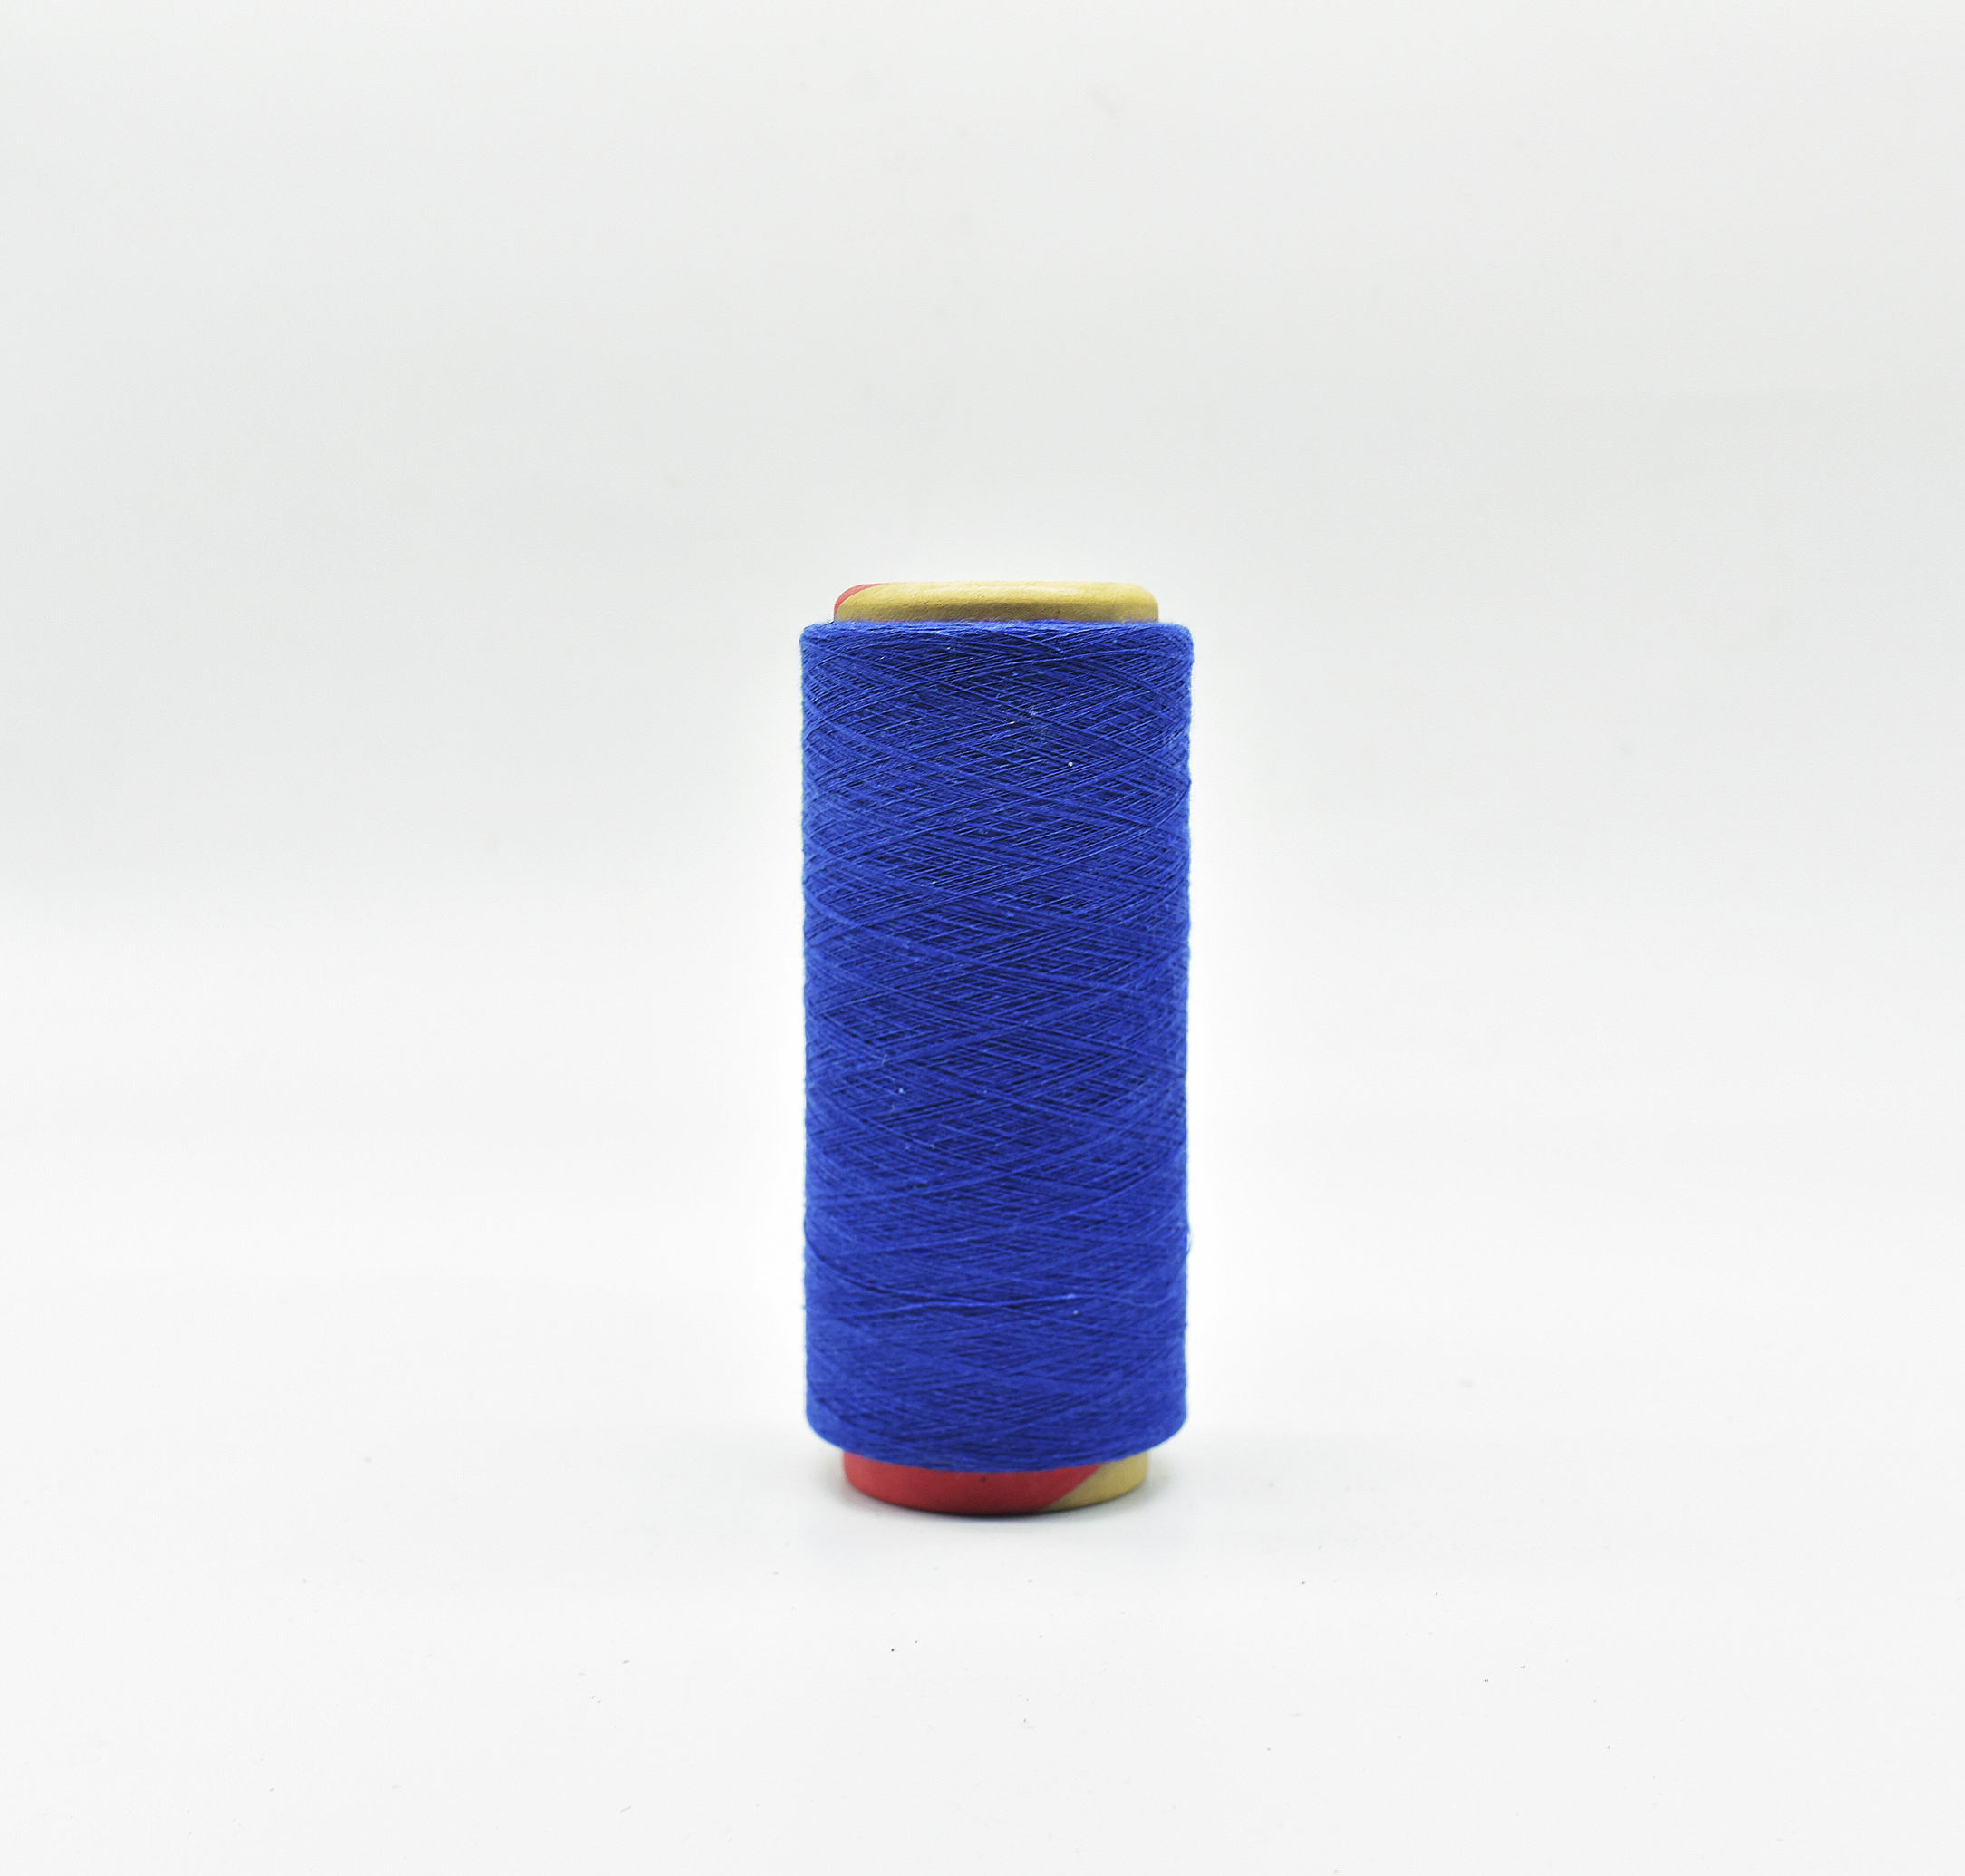 NE 16s roayl blue recycled cotton polyester yarn for knitting socks 